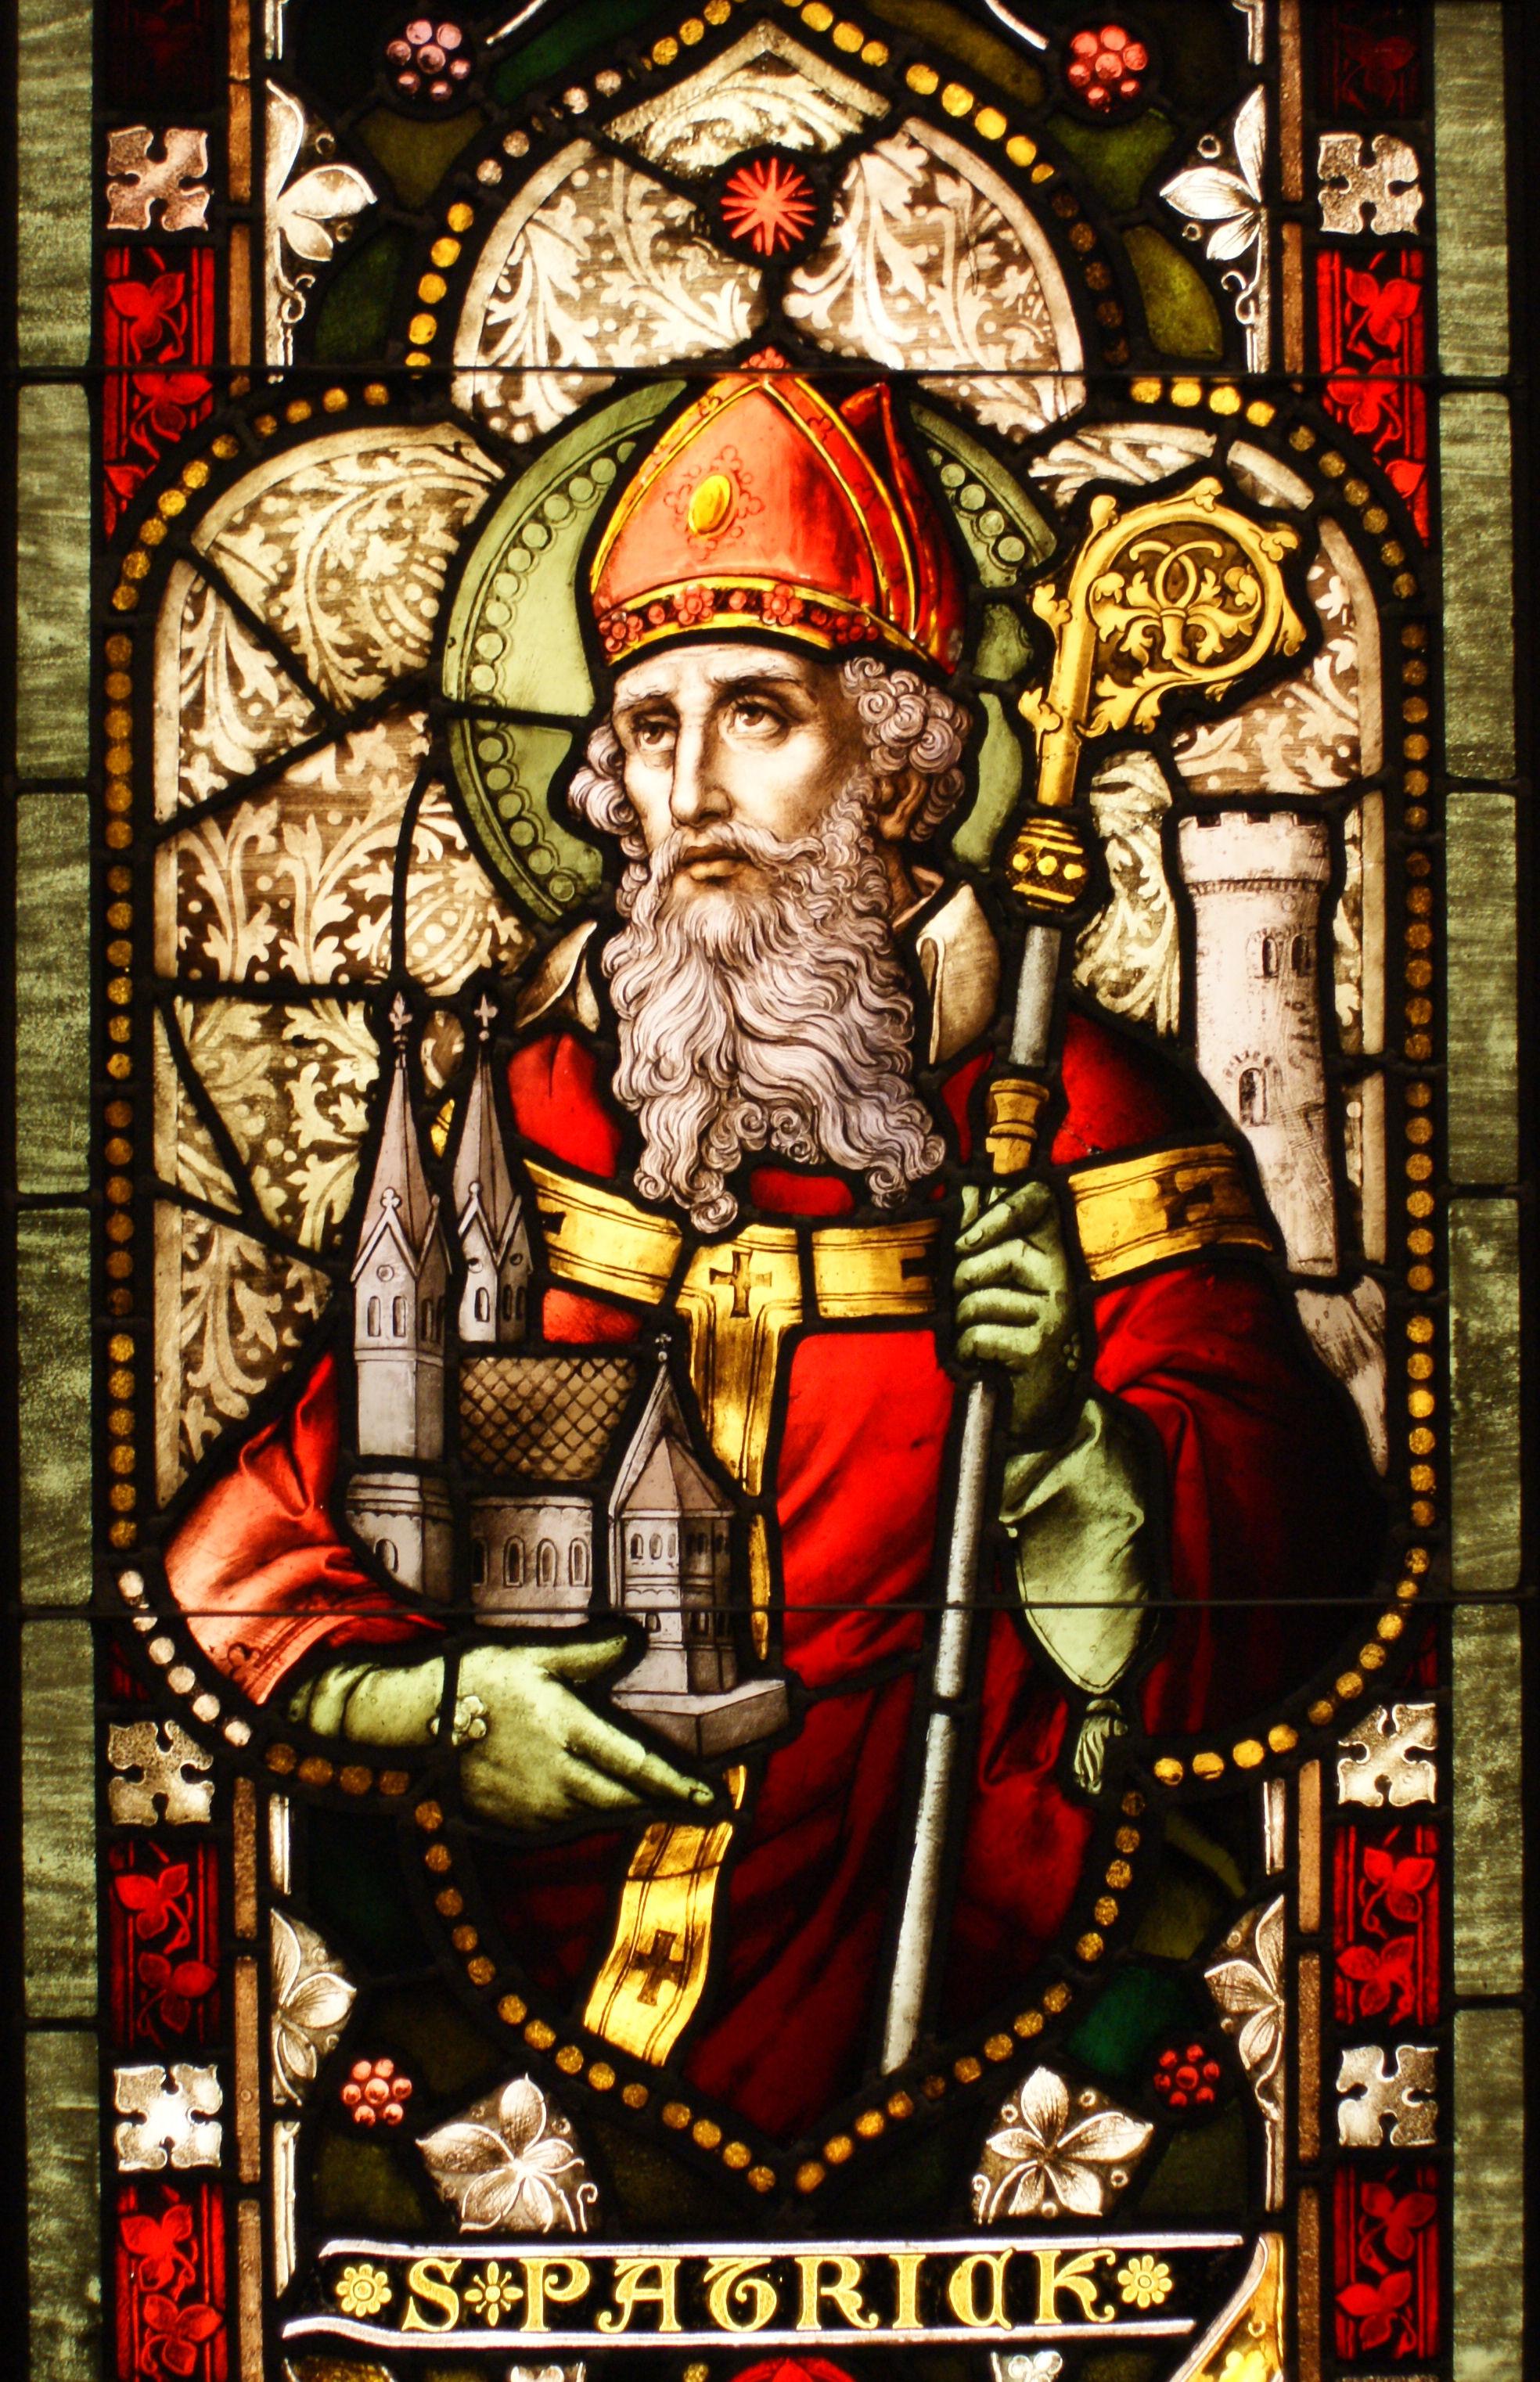 Saint Patrick, vitrail, wikimedia commons